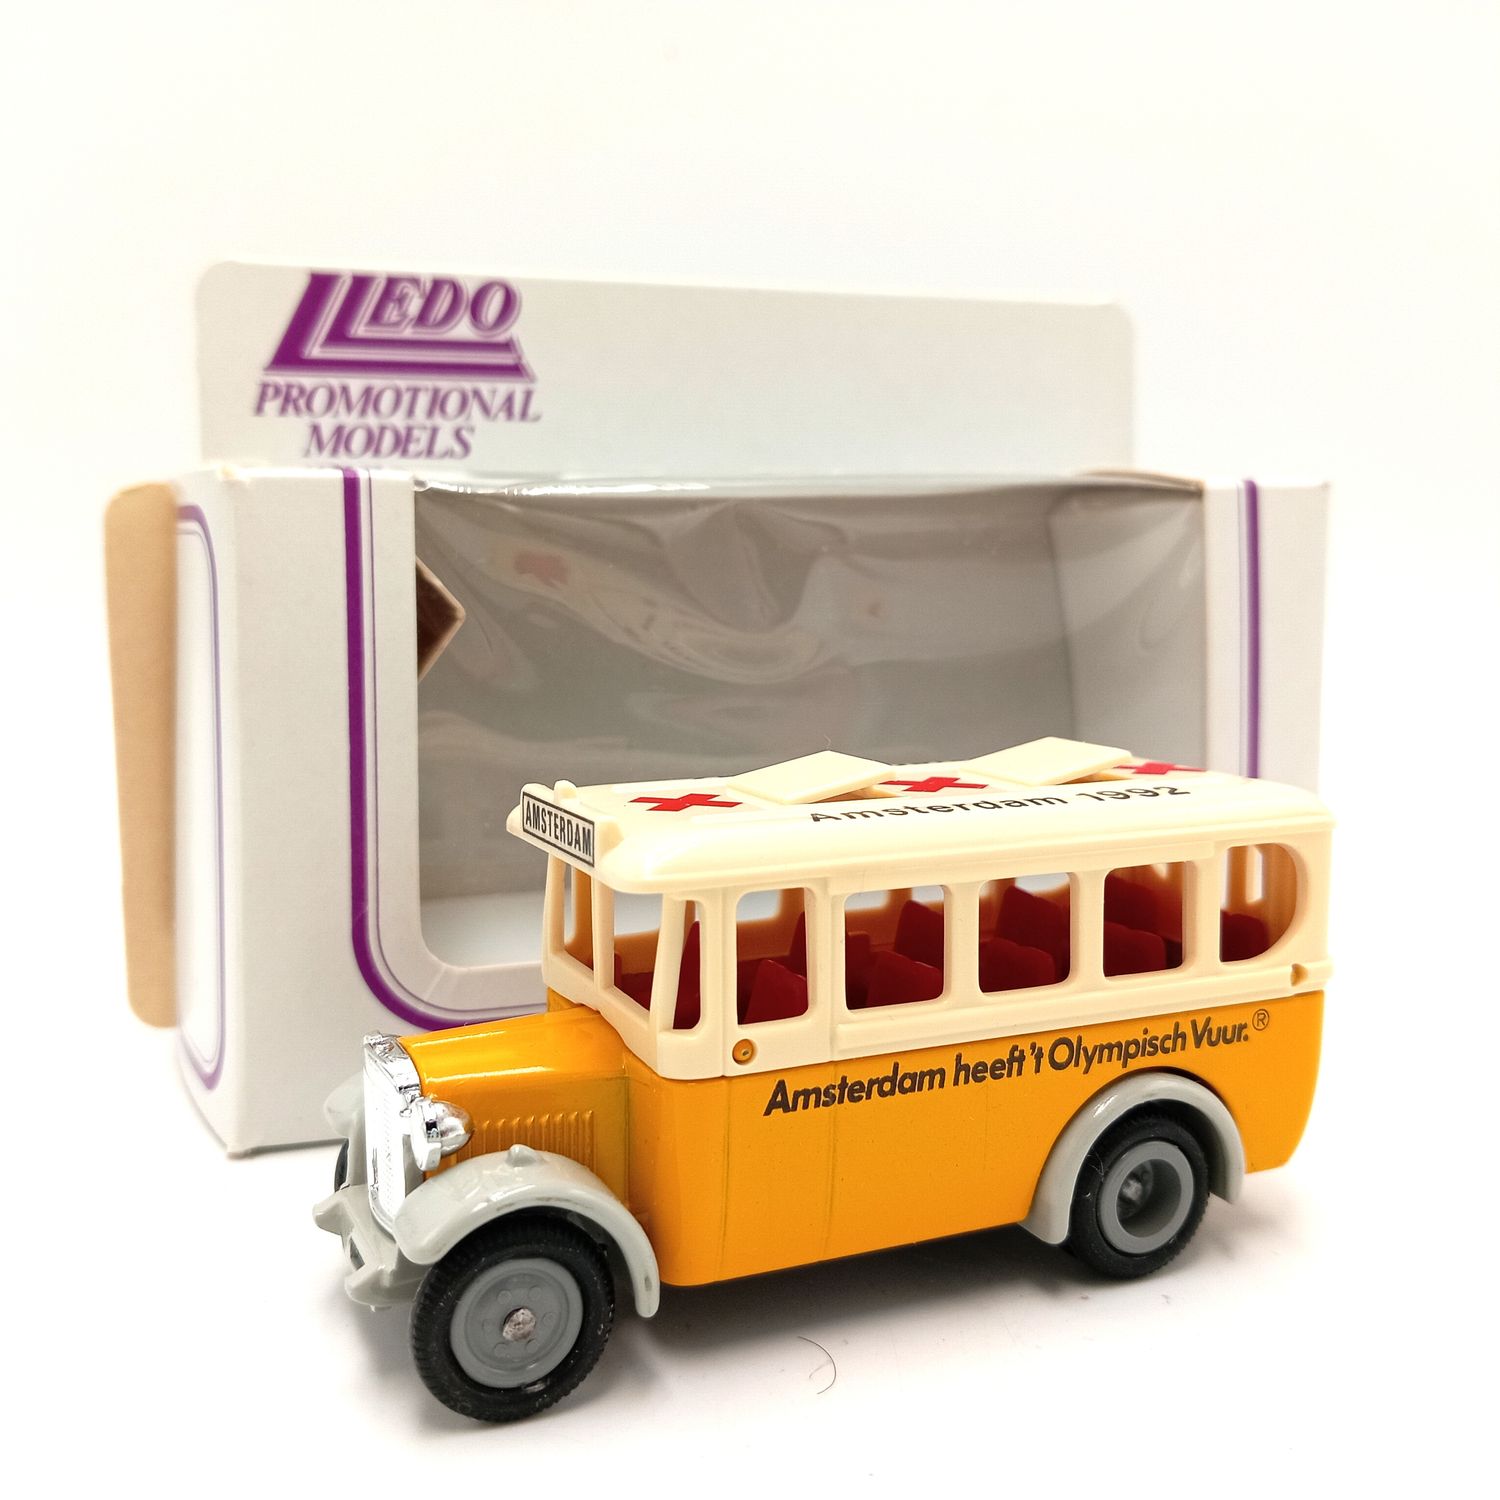 Lledo promotional model Amsterdam 1992 &quot;Amsterdam heeft&#39;t Olympisch Vuur&quot; die-cast bus in box